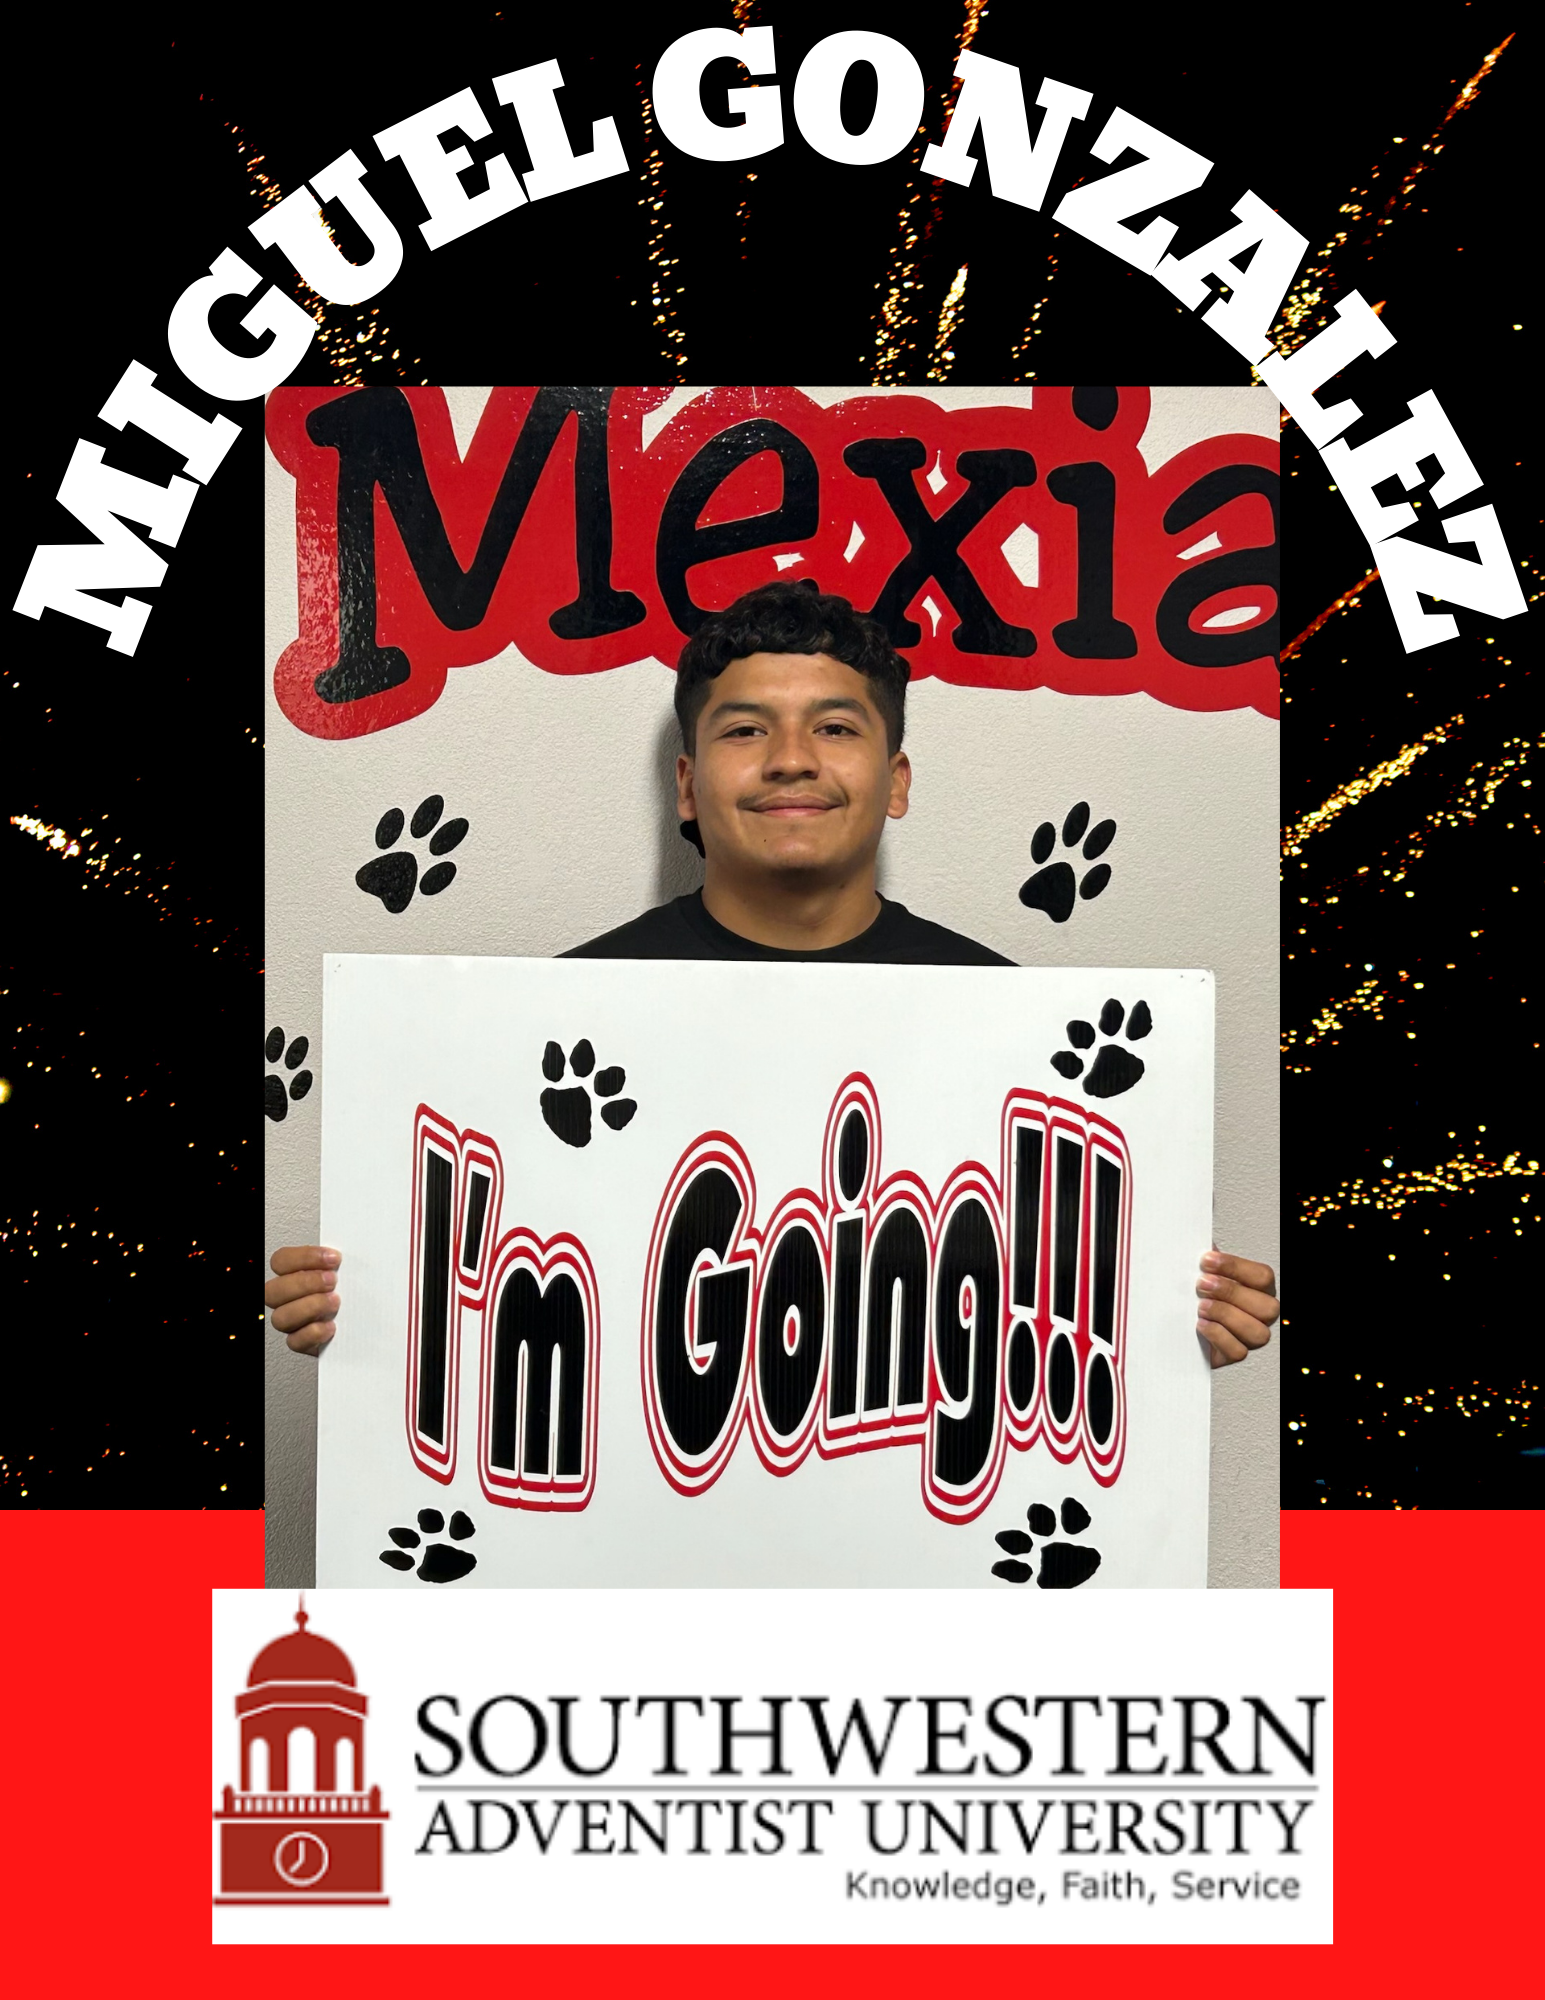 Miguel Gonzalez - I'm Going! - Southwestern Adventist University - Knowledge, Faith, Service